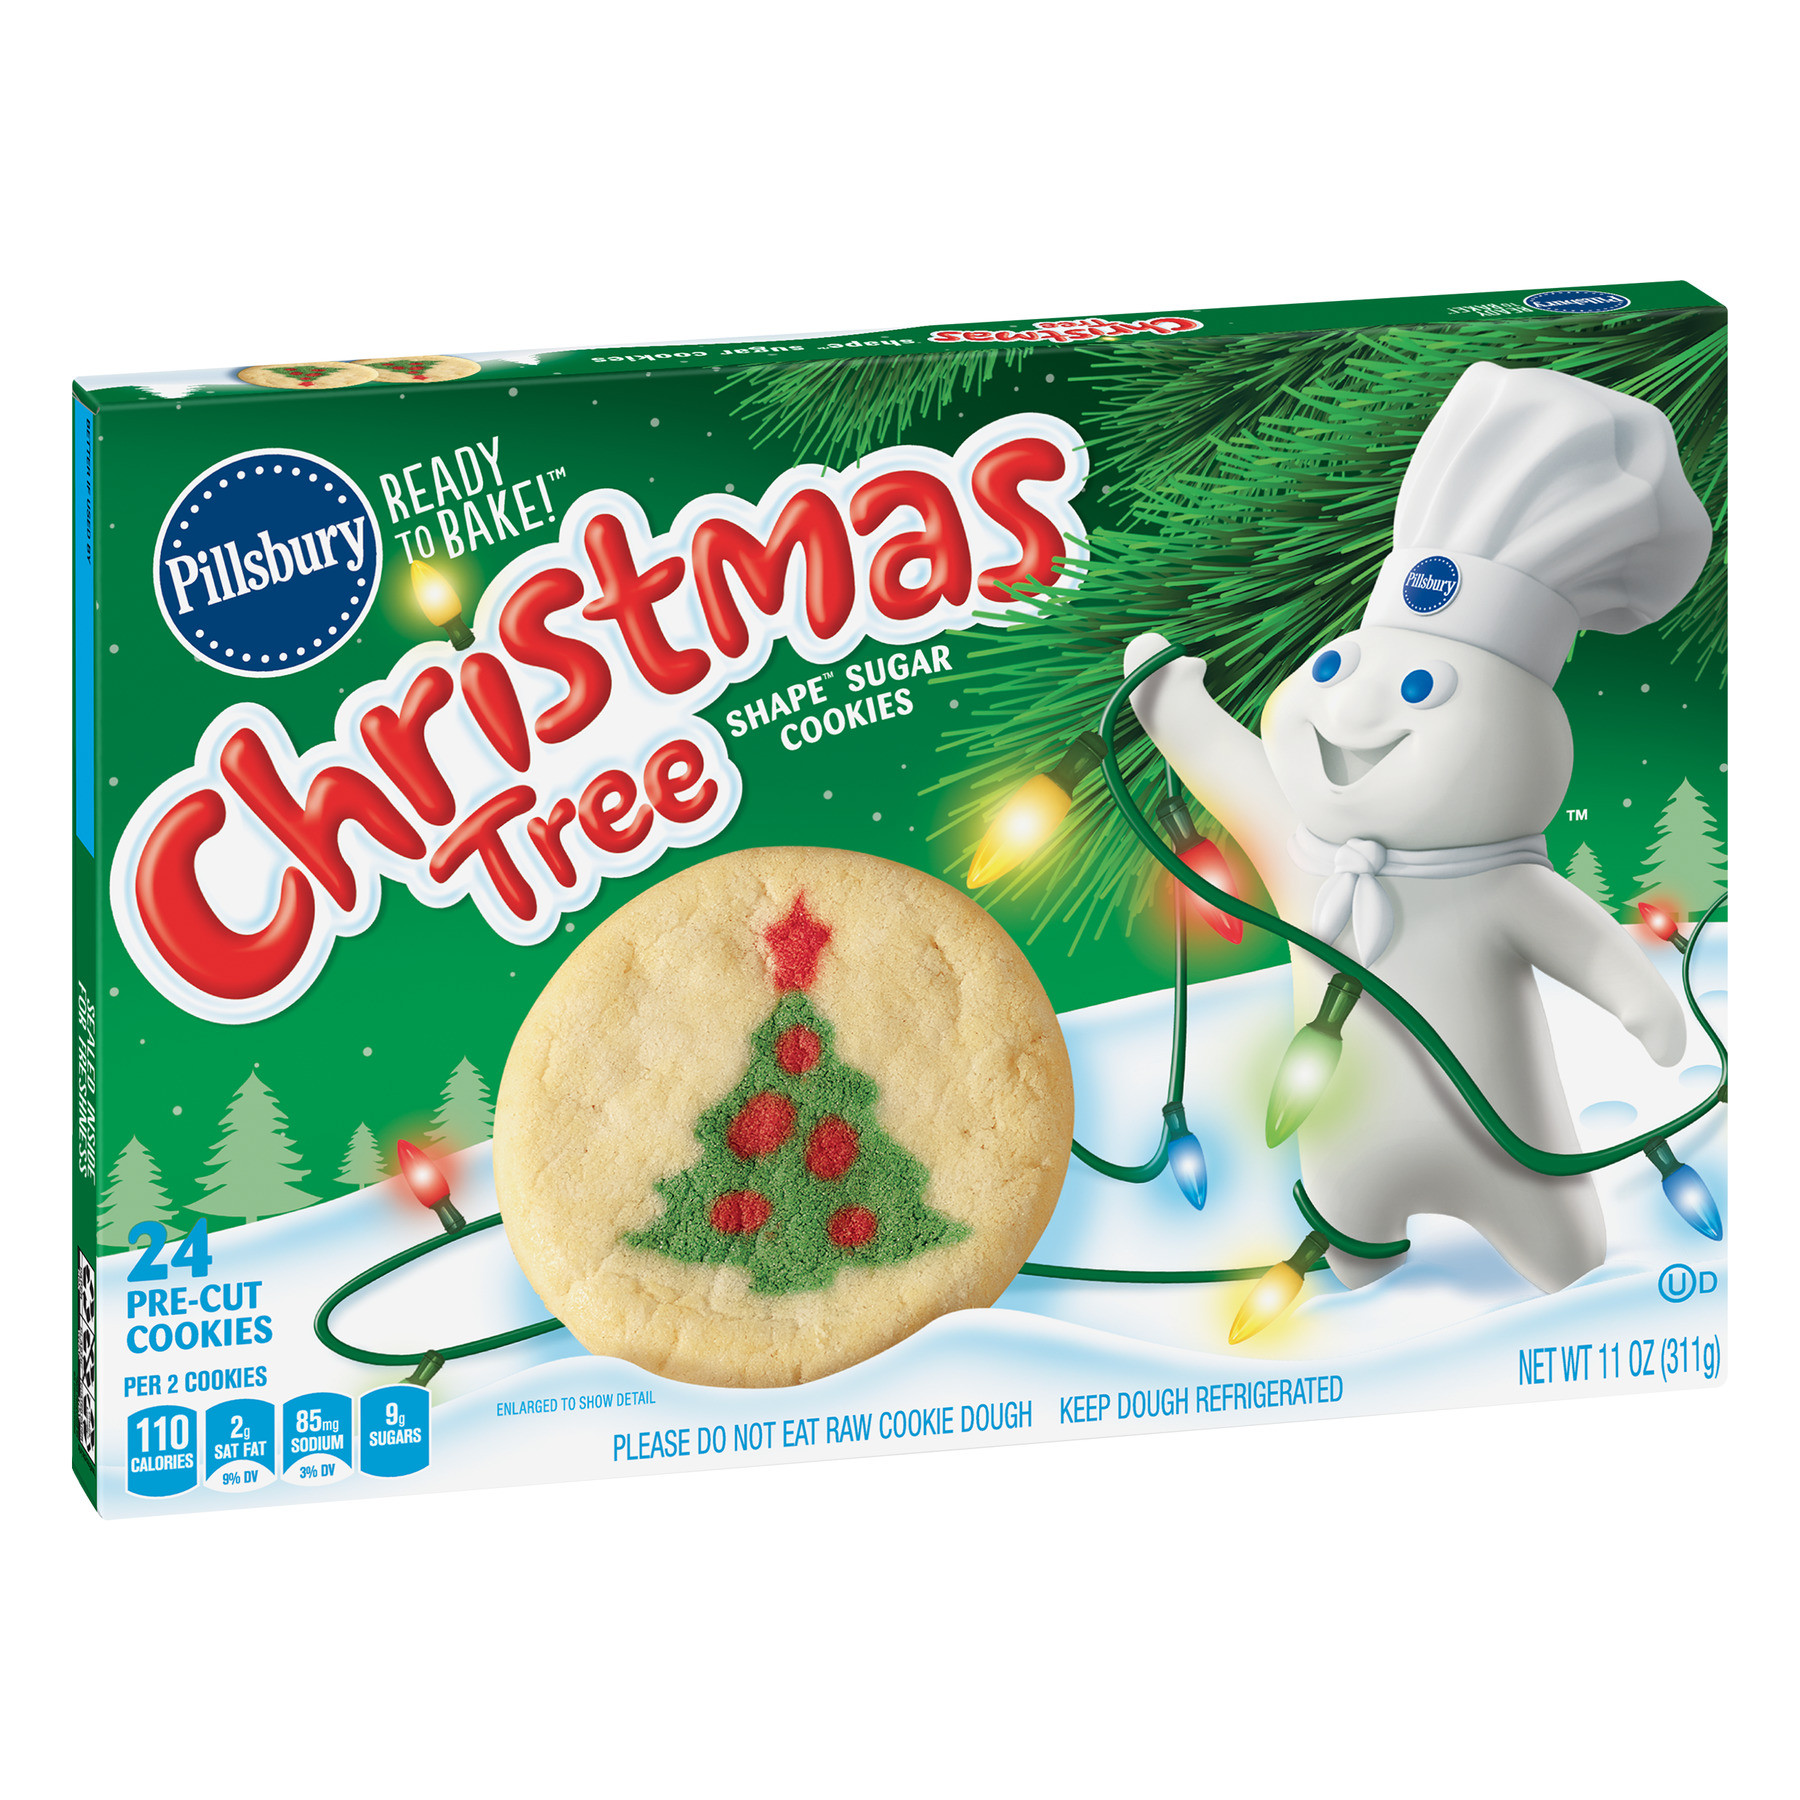 Christmas Cookies Walmart
 Pillsbury Ready to Bake Christmas Tree Shape Sugar